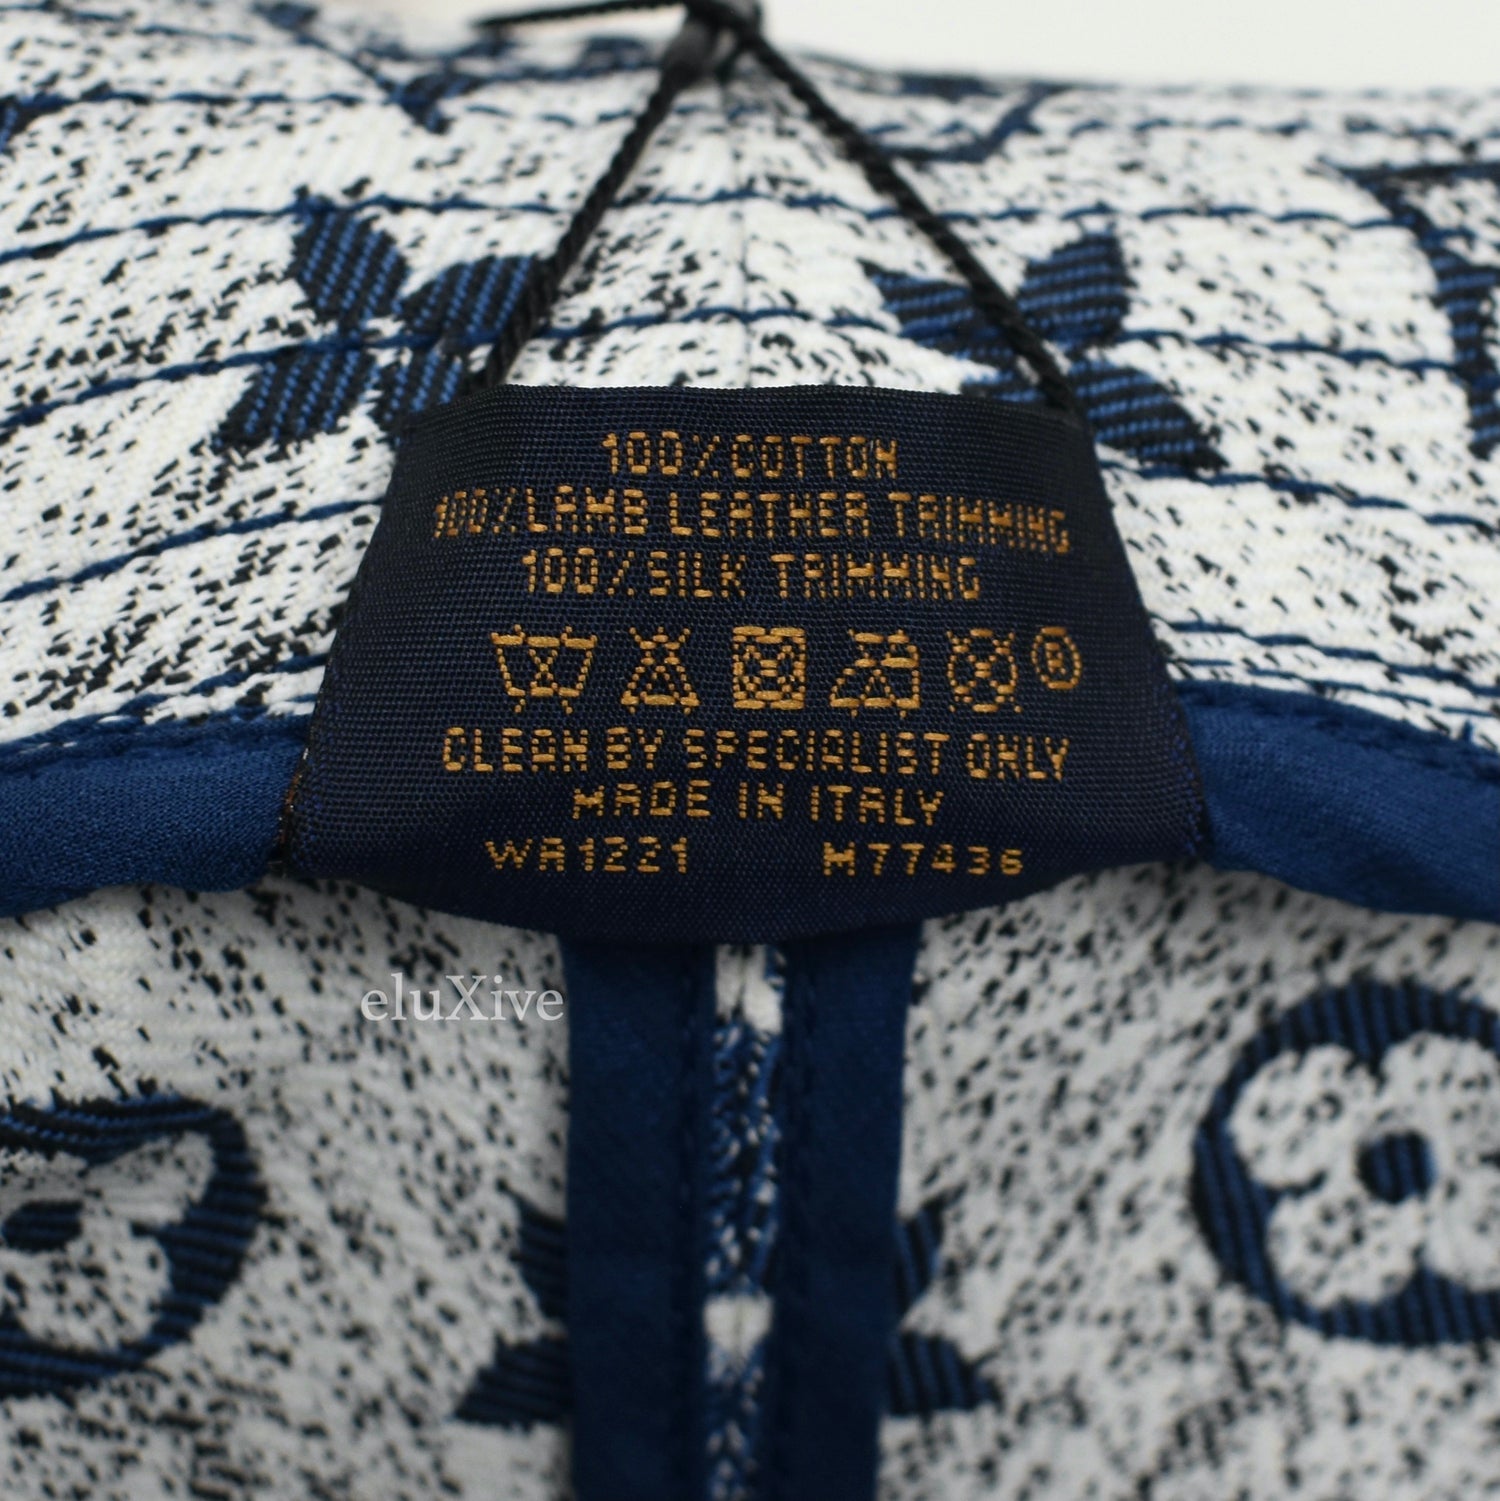 Louis Vuitton Large Size 60 Blue Monogram Bandana Bucket Hat